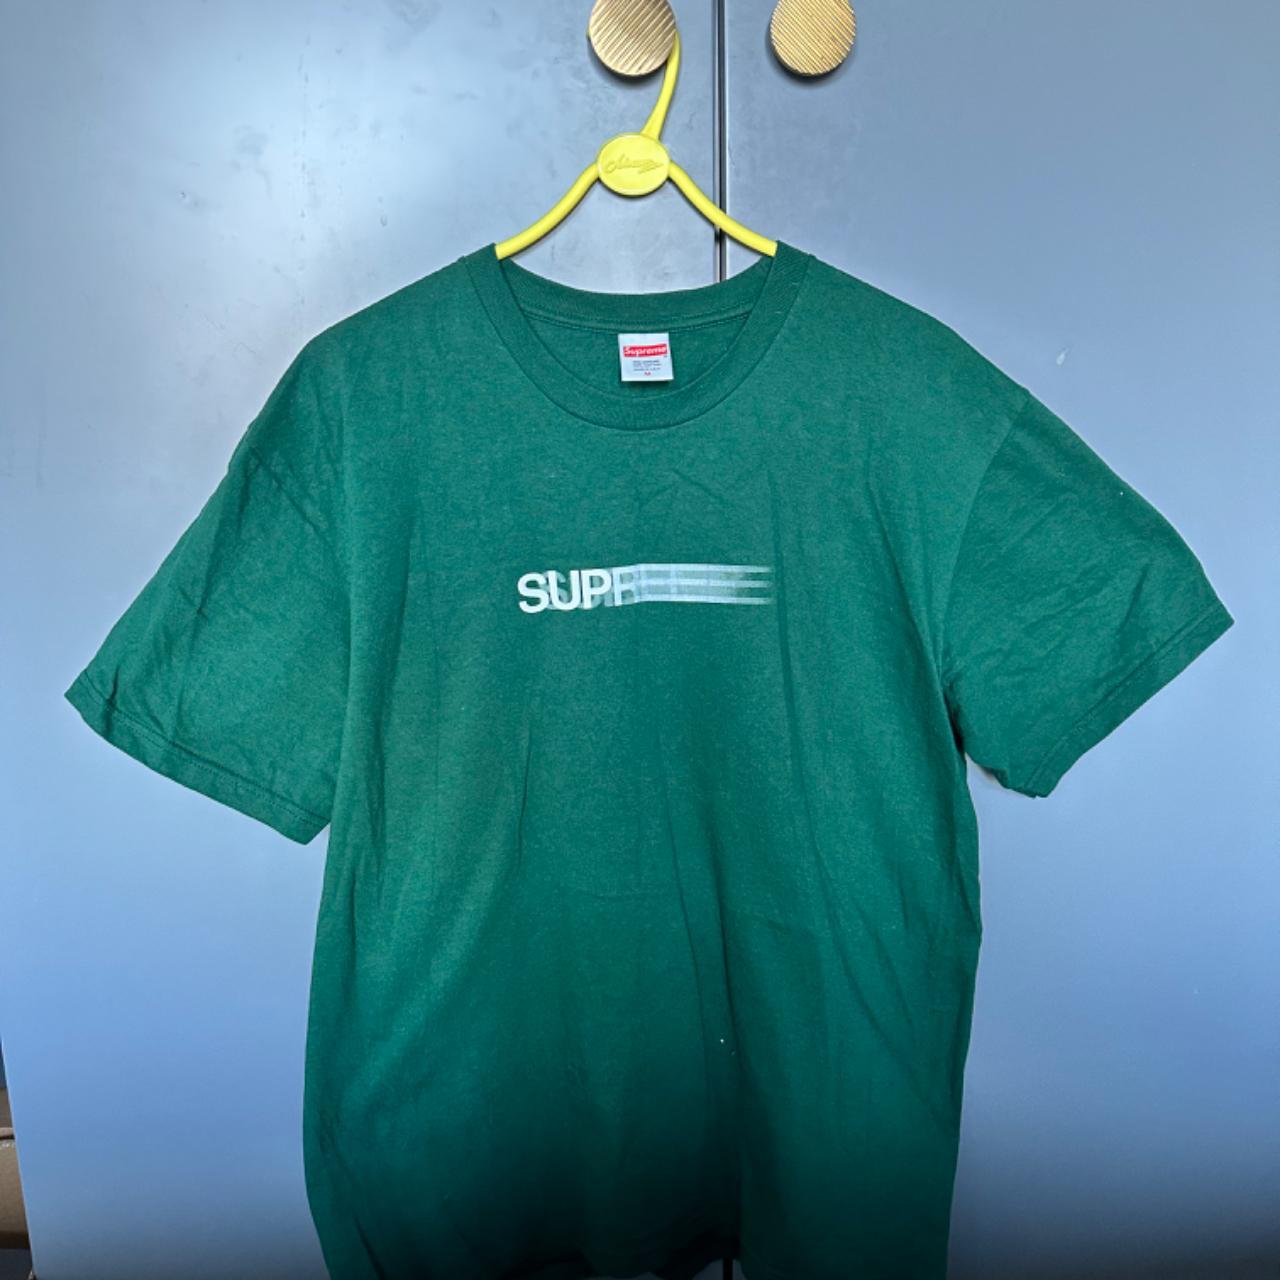 Supreme motion blur logo tee shirt. Green. Rare tee.... - Depop